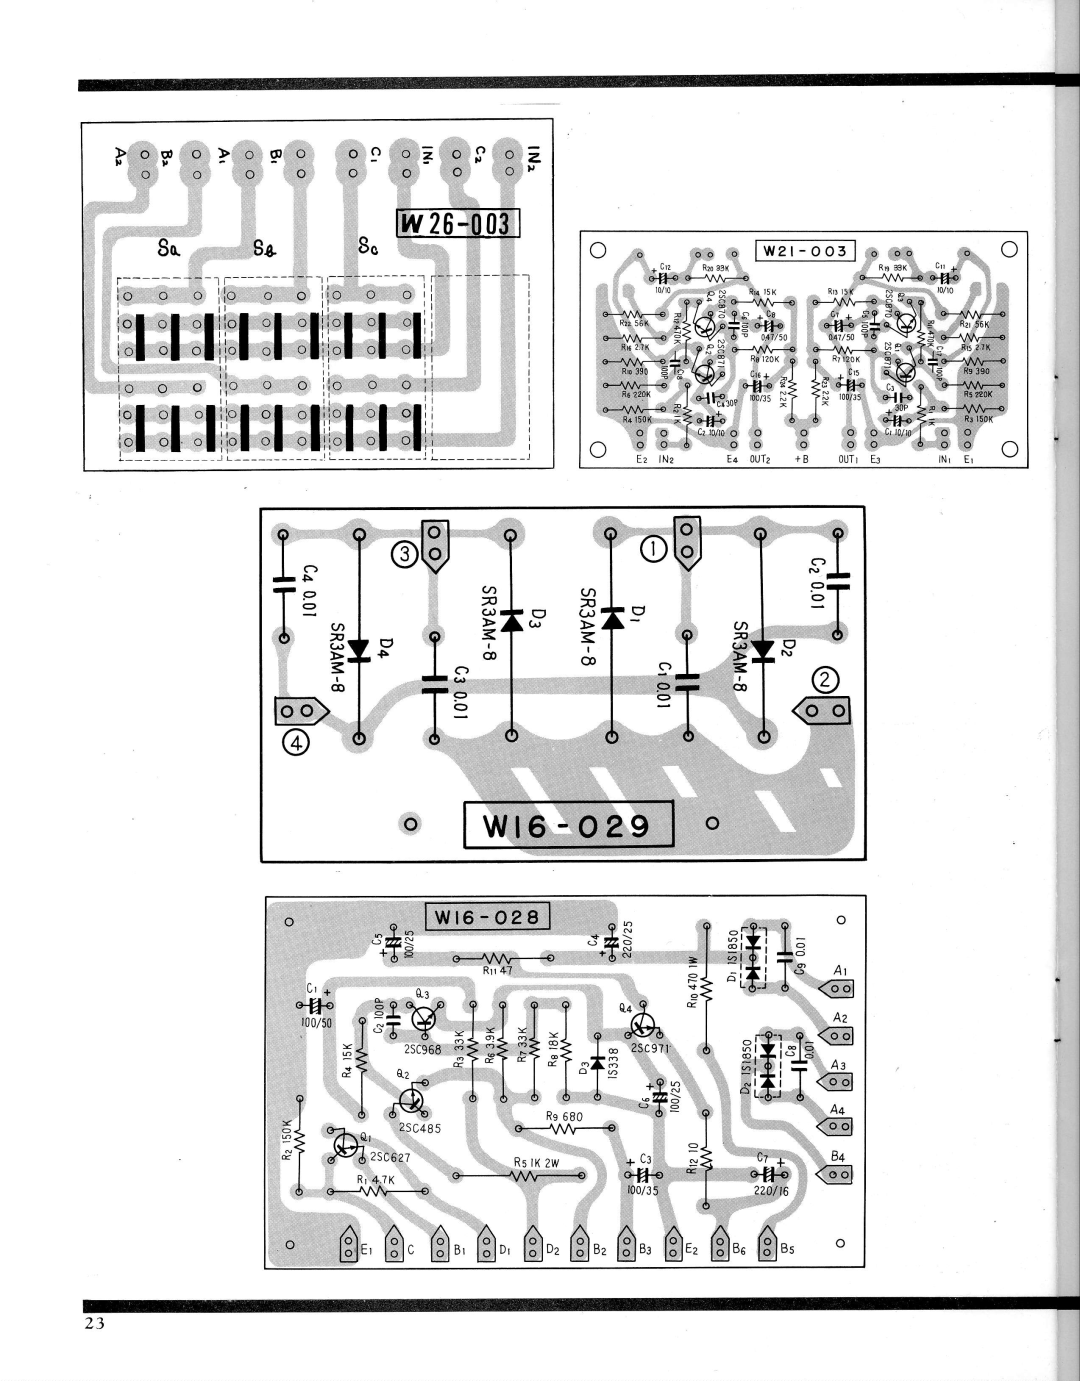 Pioneer SX-9000 service manual c ;**ffi*,,,*$ 